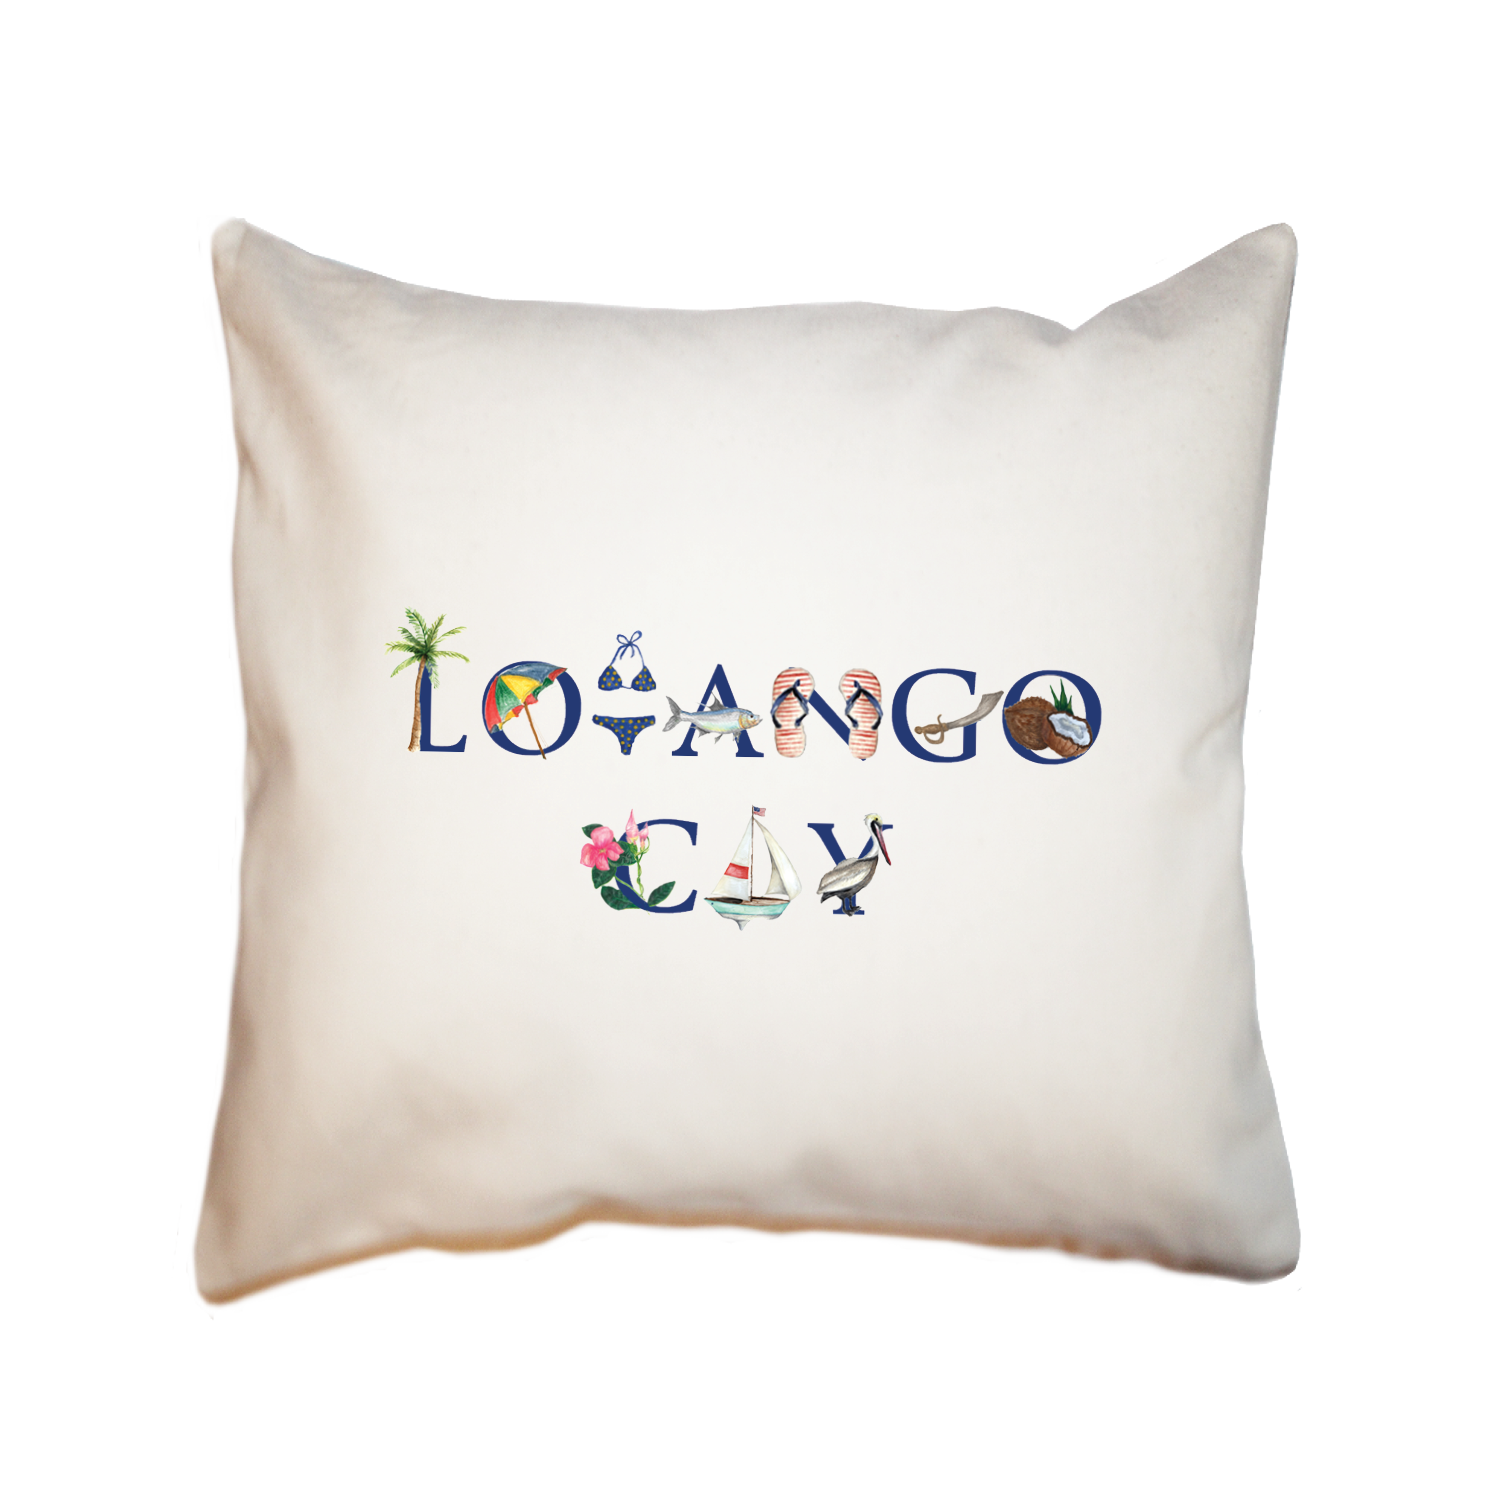 lovango cay square pillow